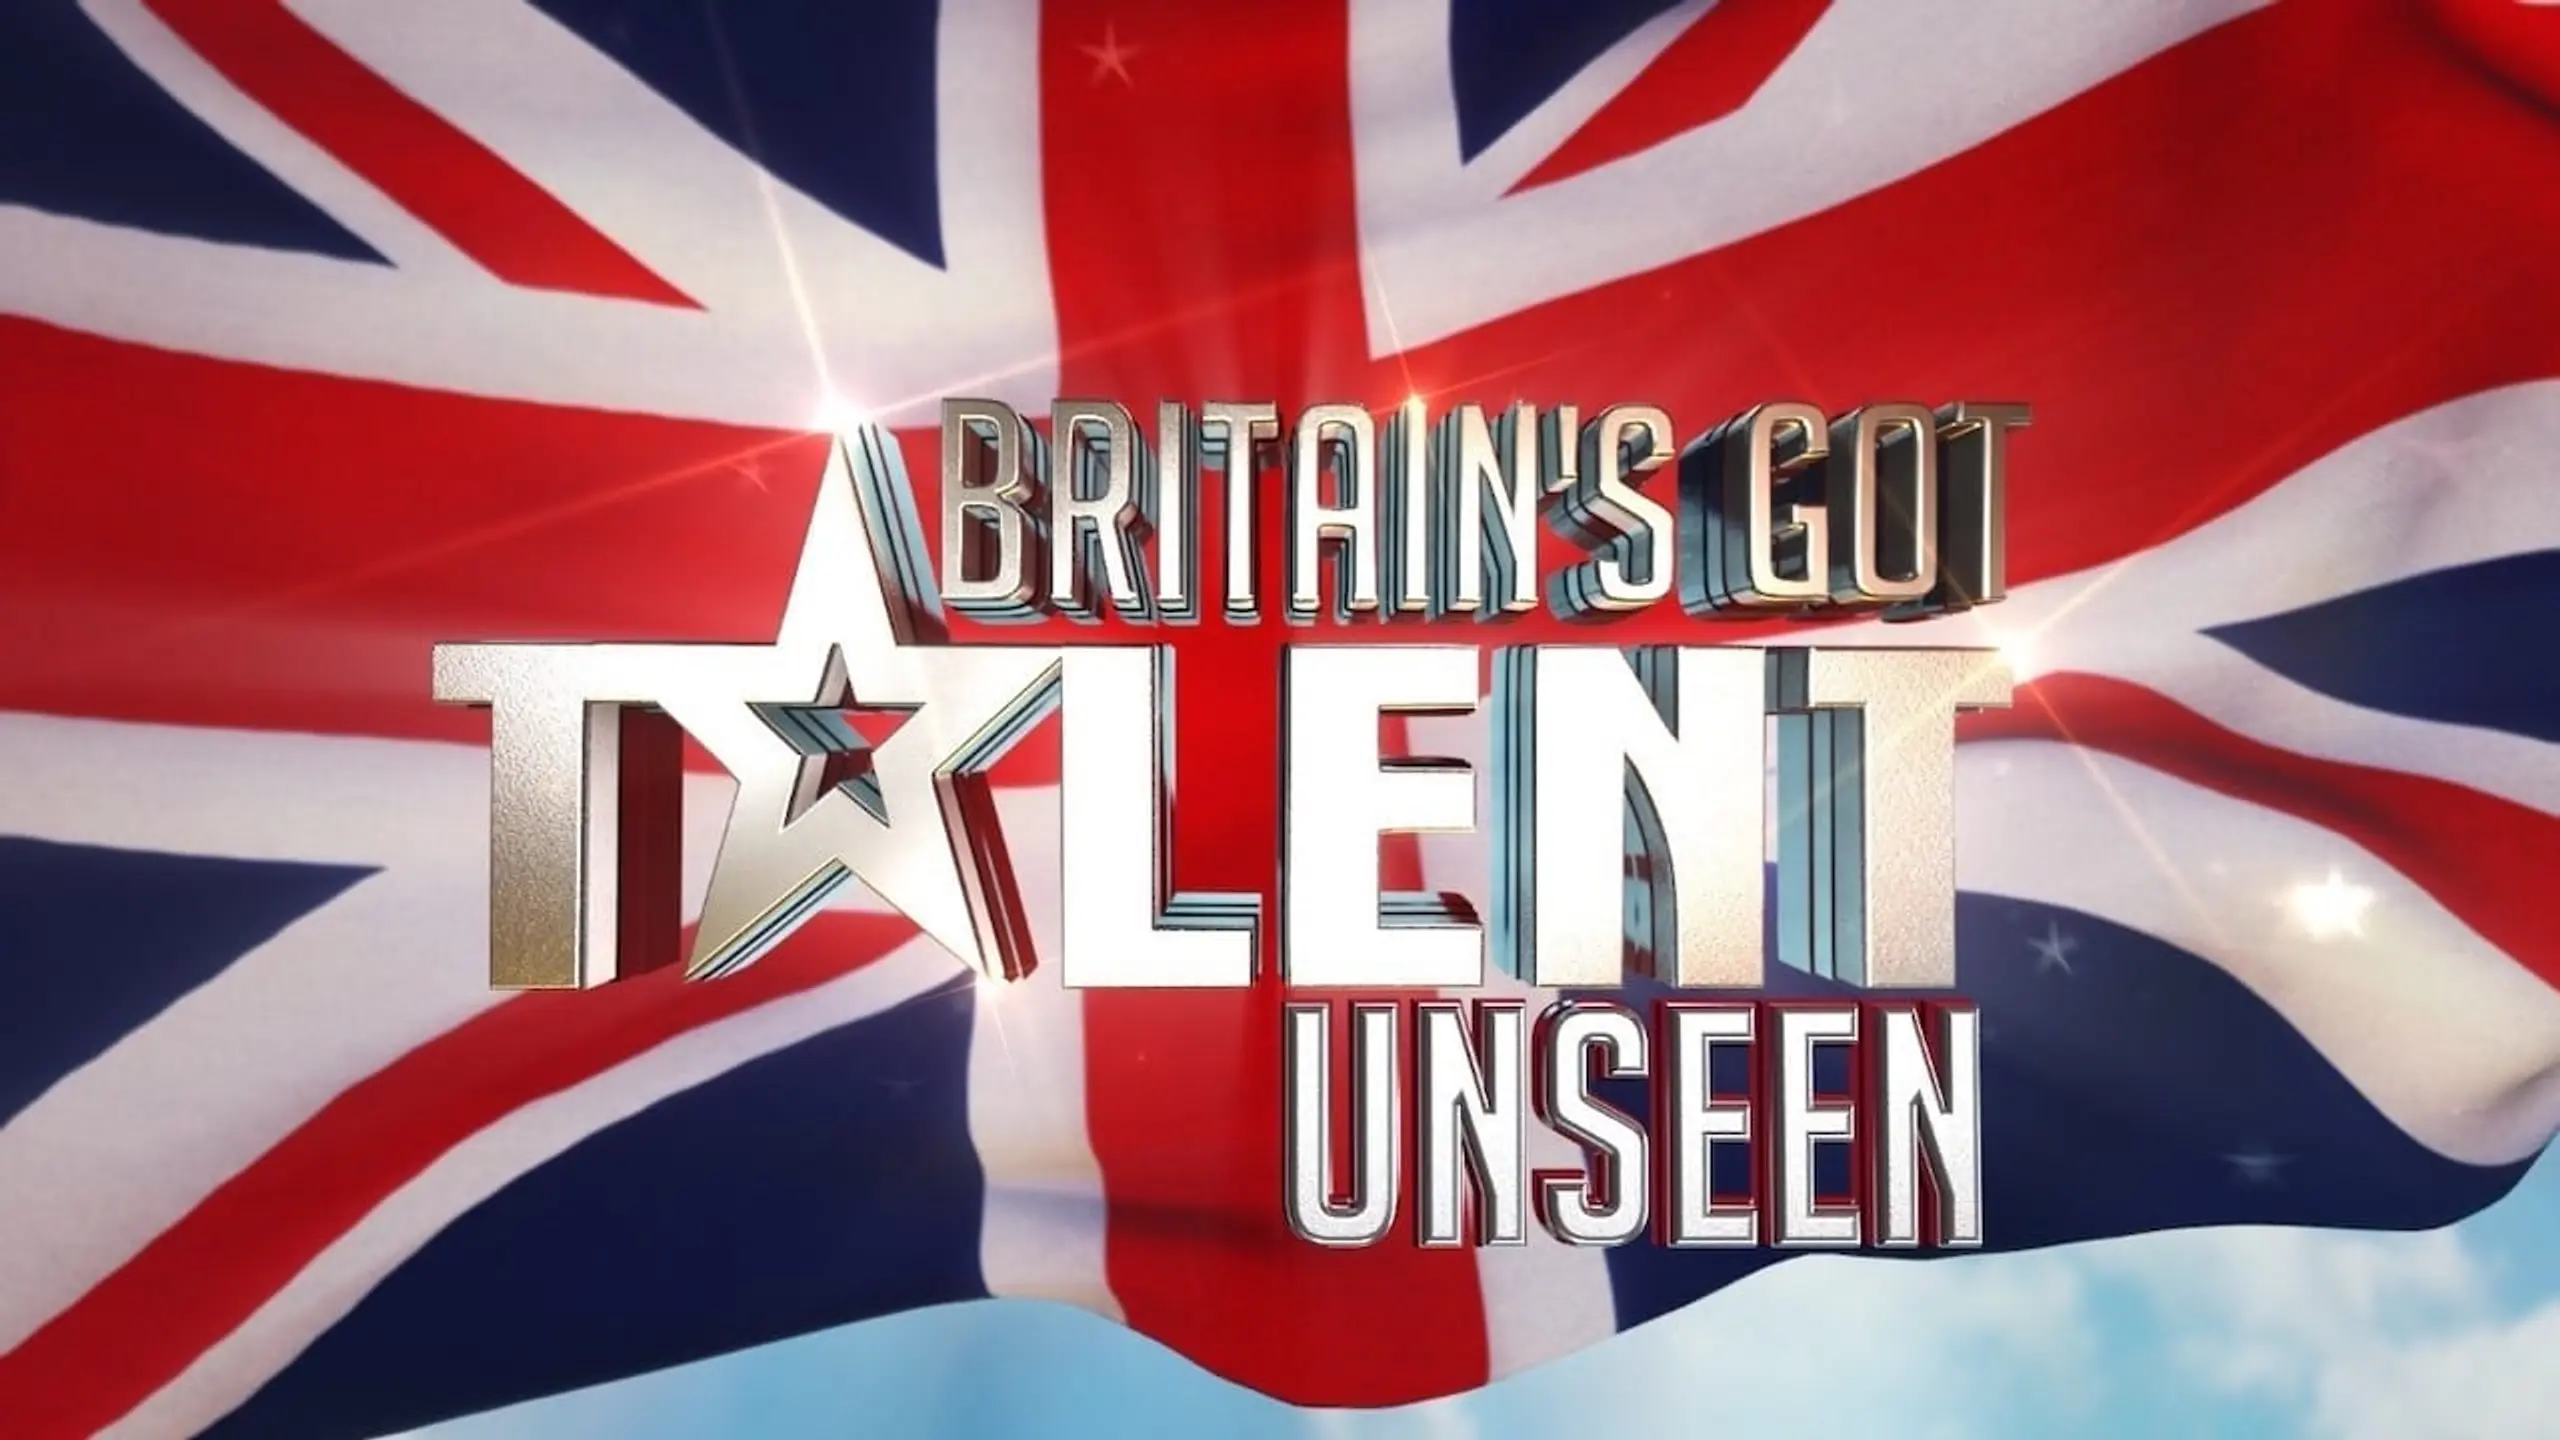 Britain's Got Talent: Unseen